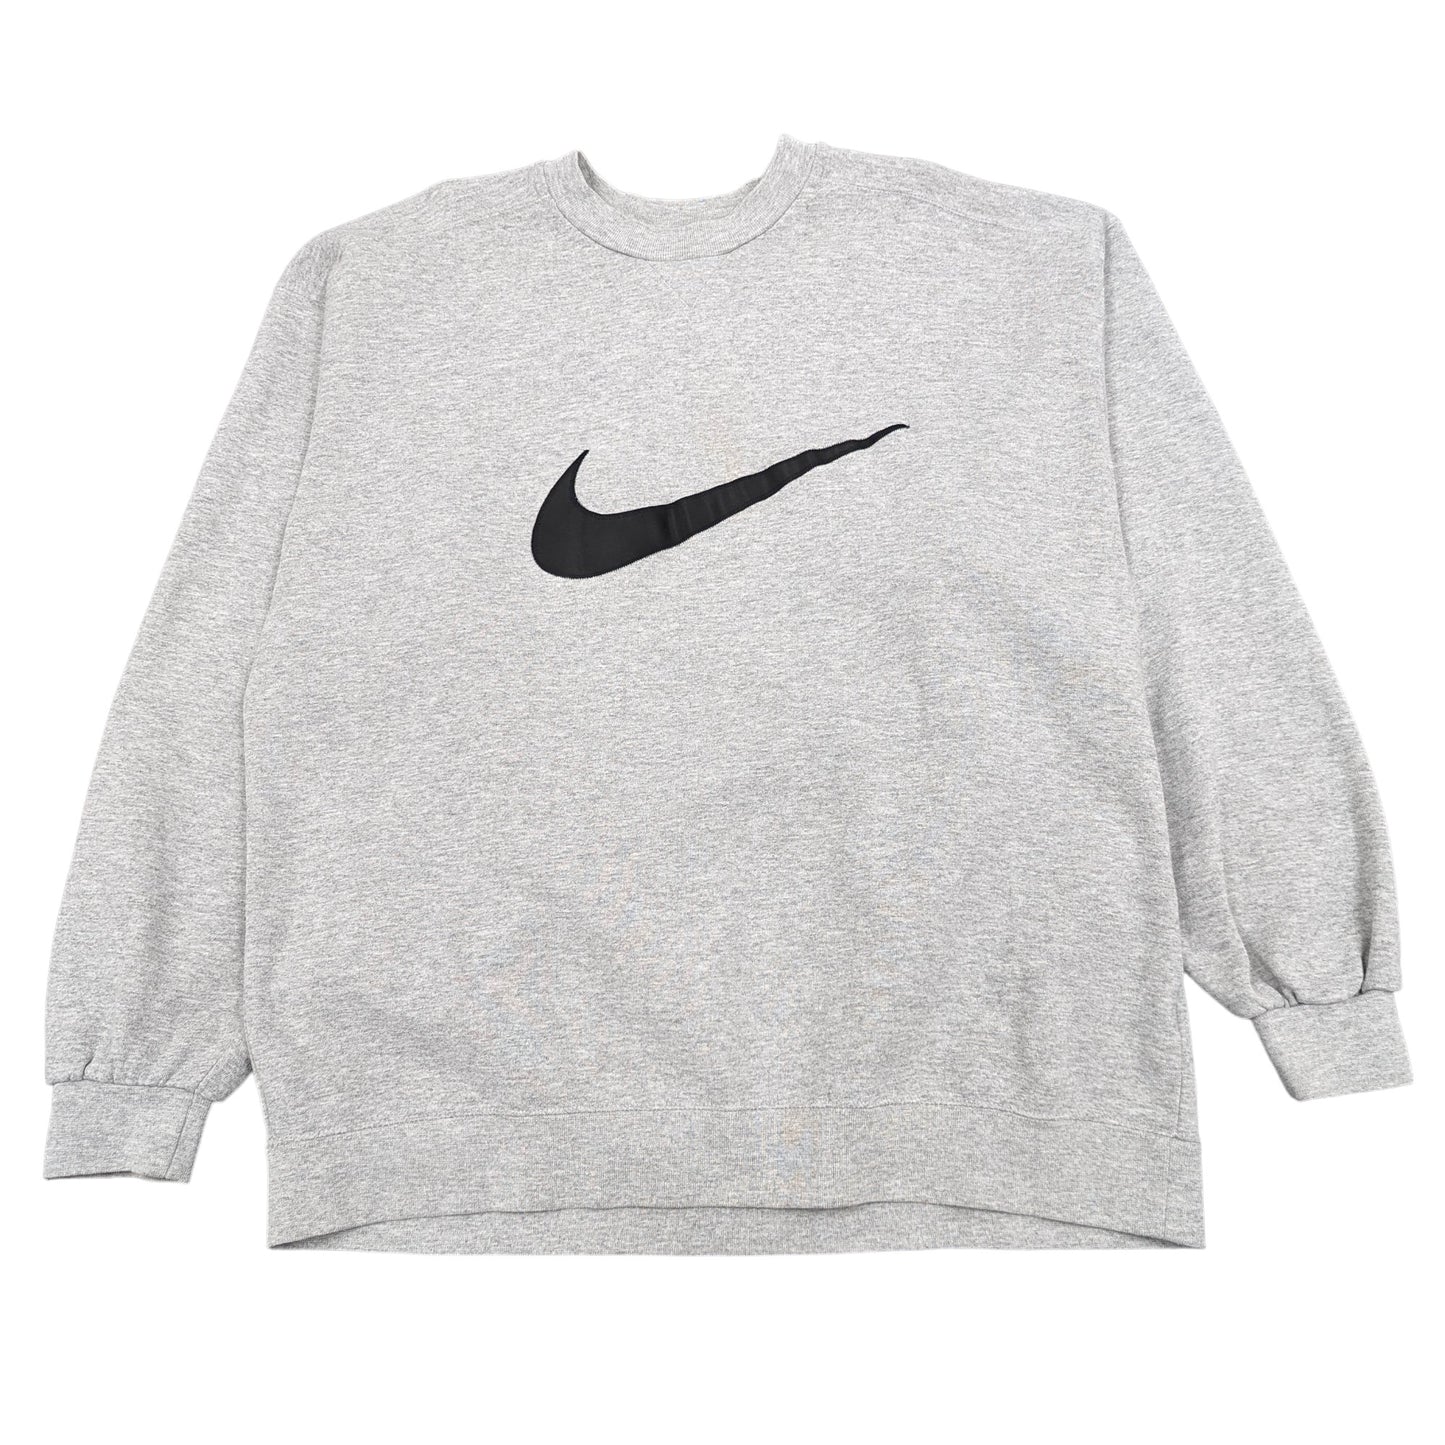 90s Nike Sweatshirt Size XL